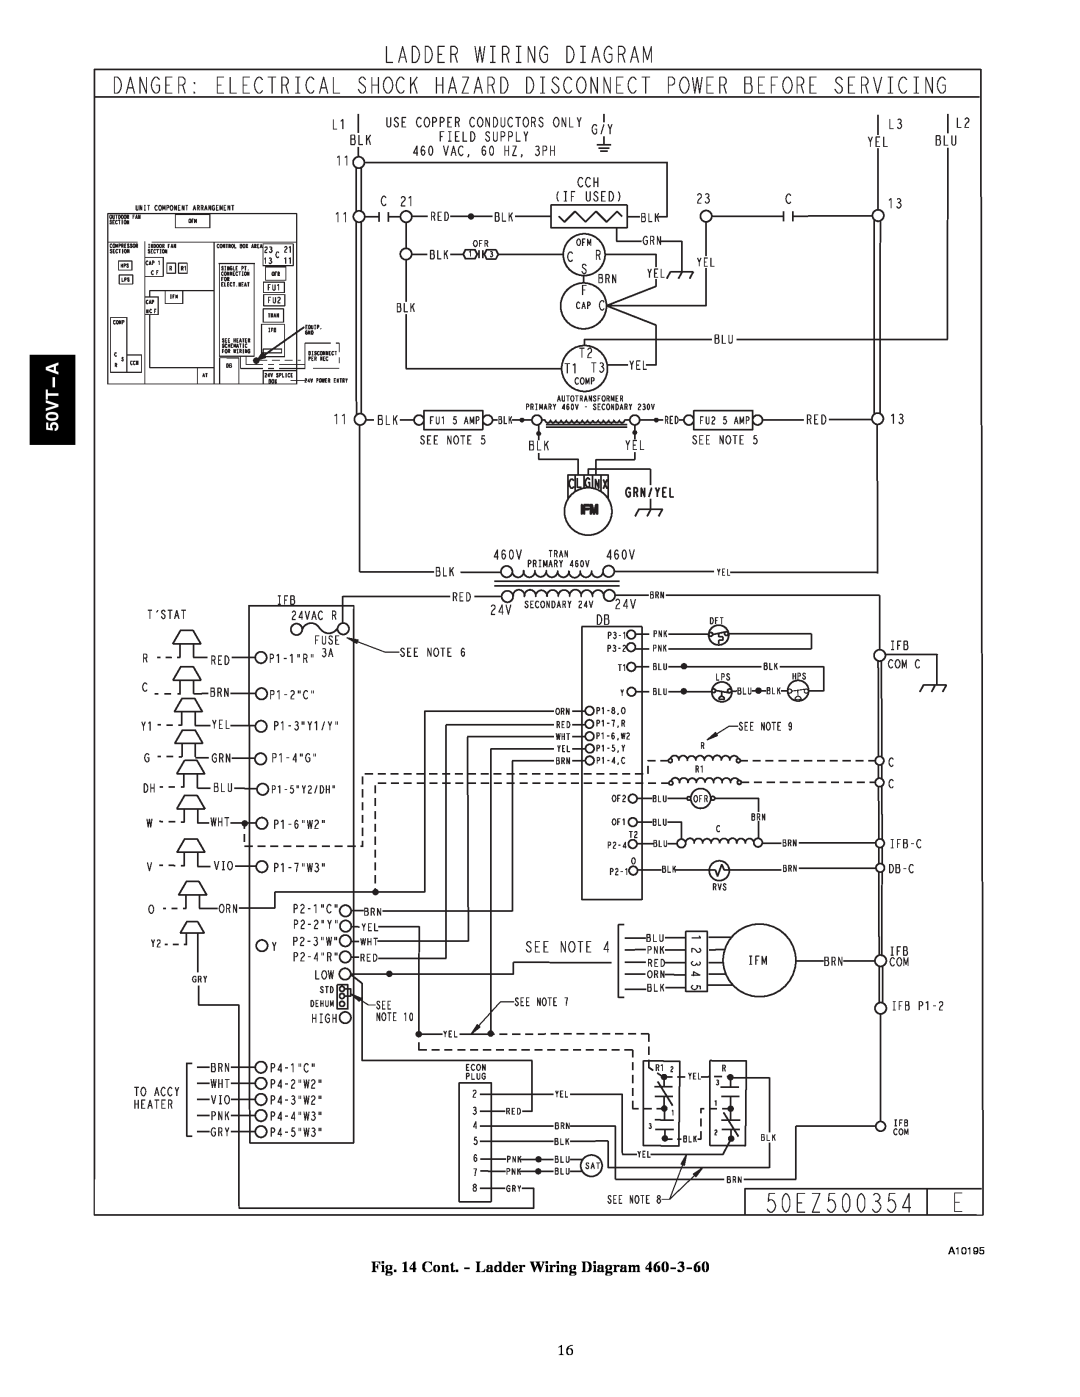 Carrier 50VT-A installation instructions Cont. - Ladder Wiring Diagram, 50VT--A 